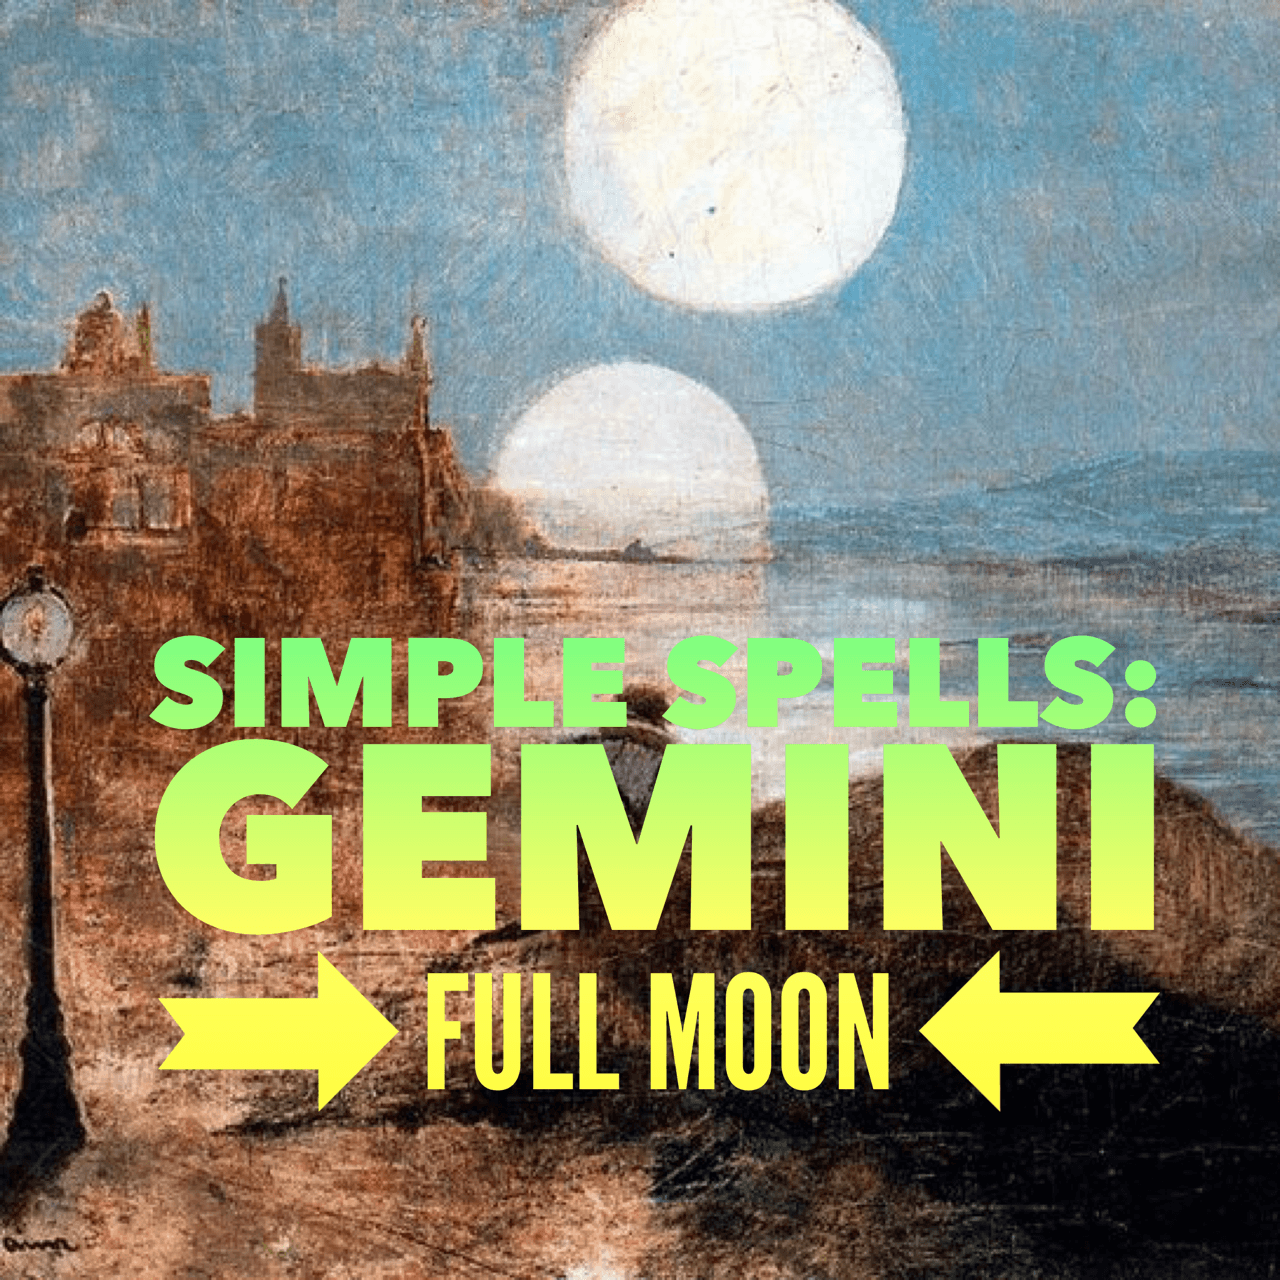 Simple Spells for the Full Moon in Gemini.